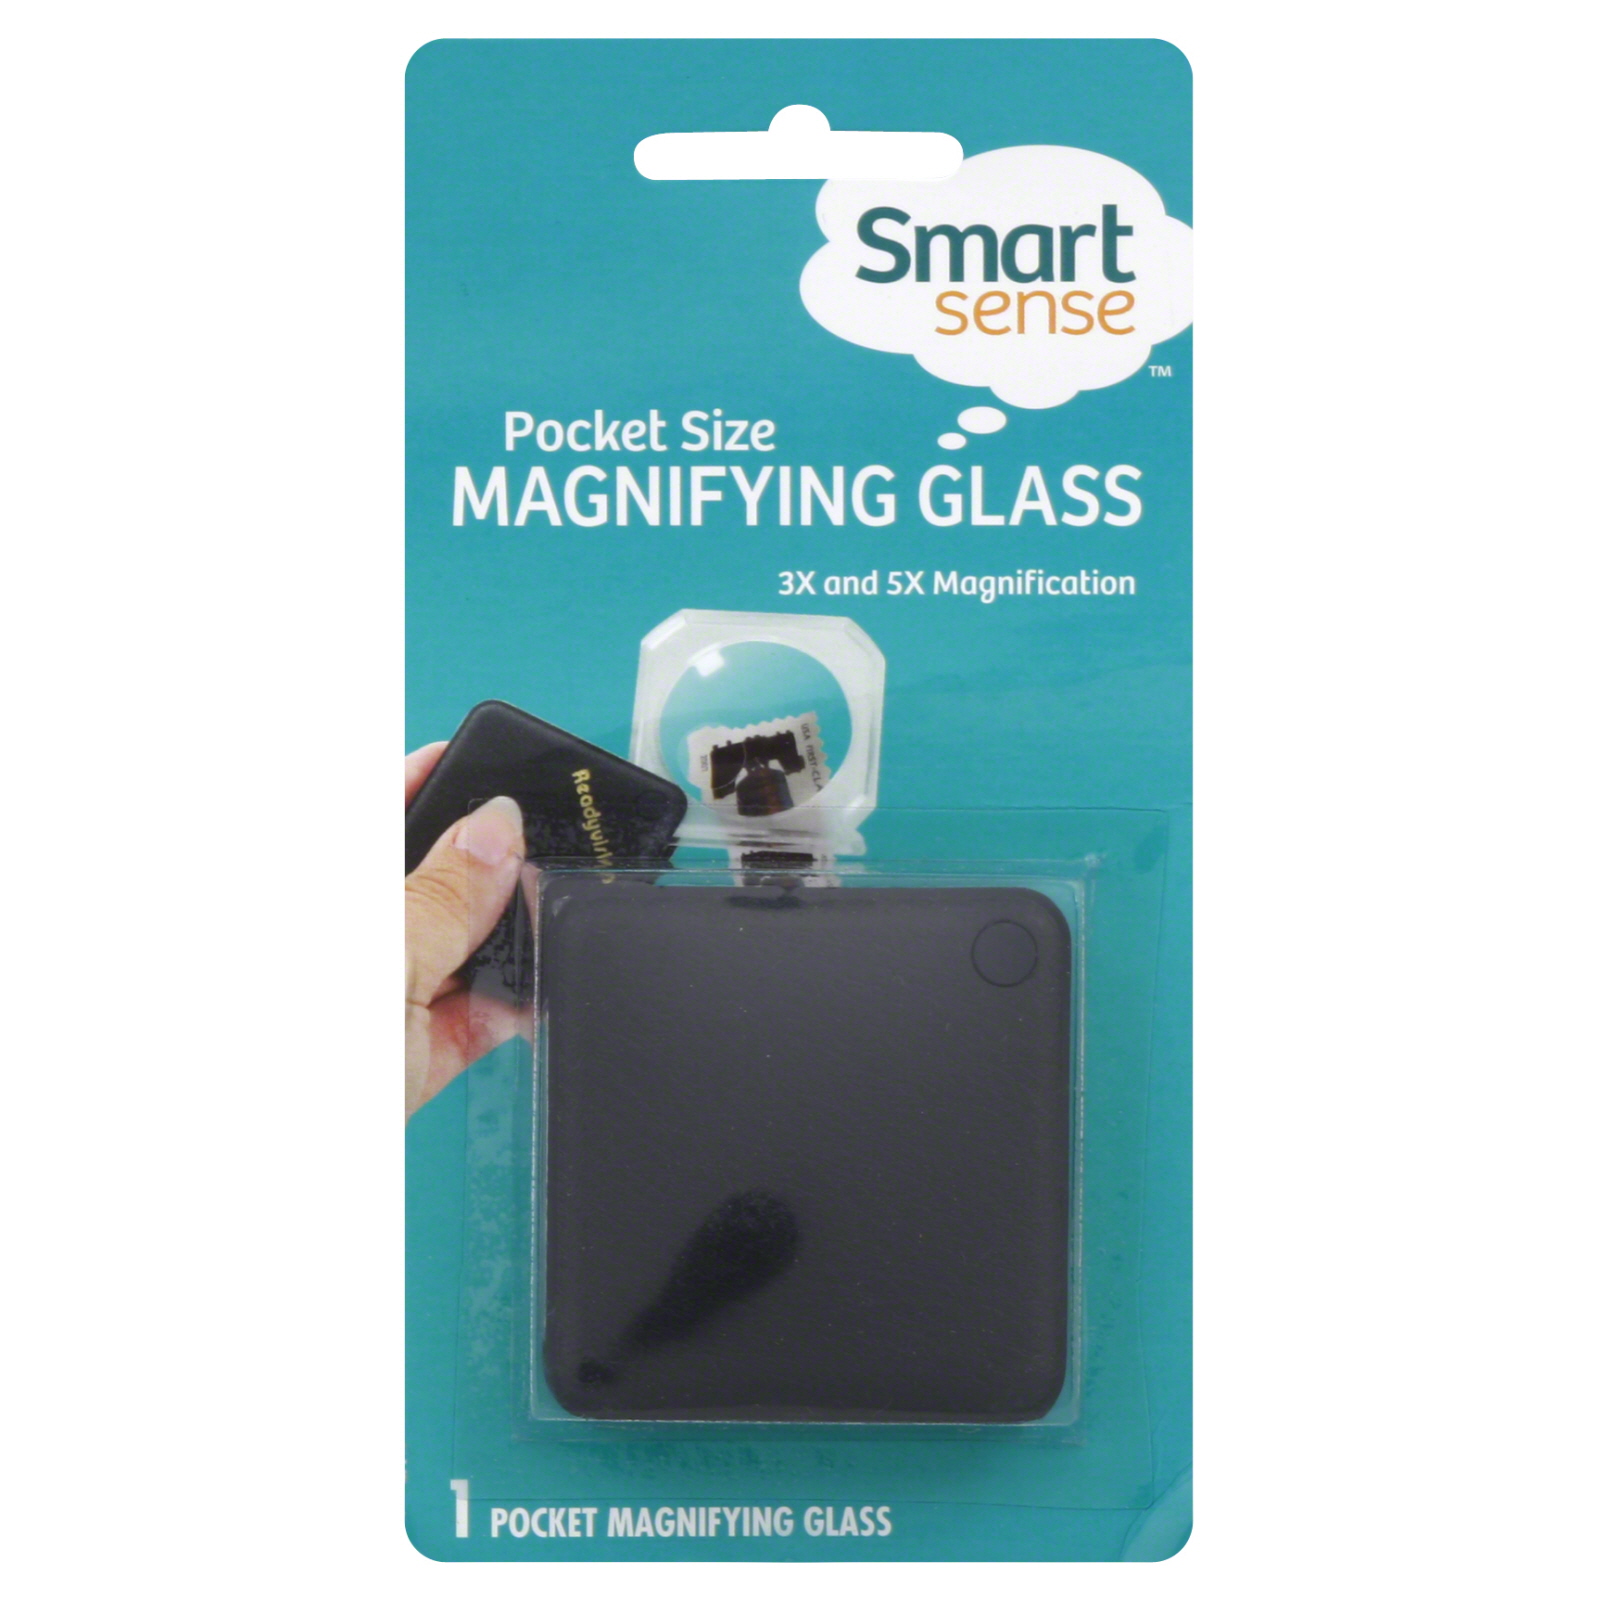 Smart Sense Magnifying Glass, Pocket Size 1 magnifying glass